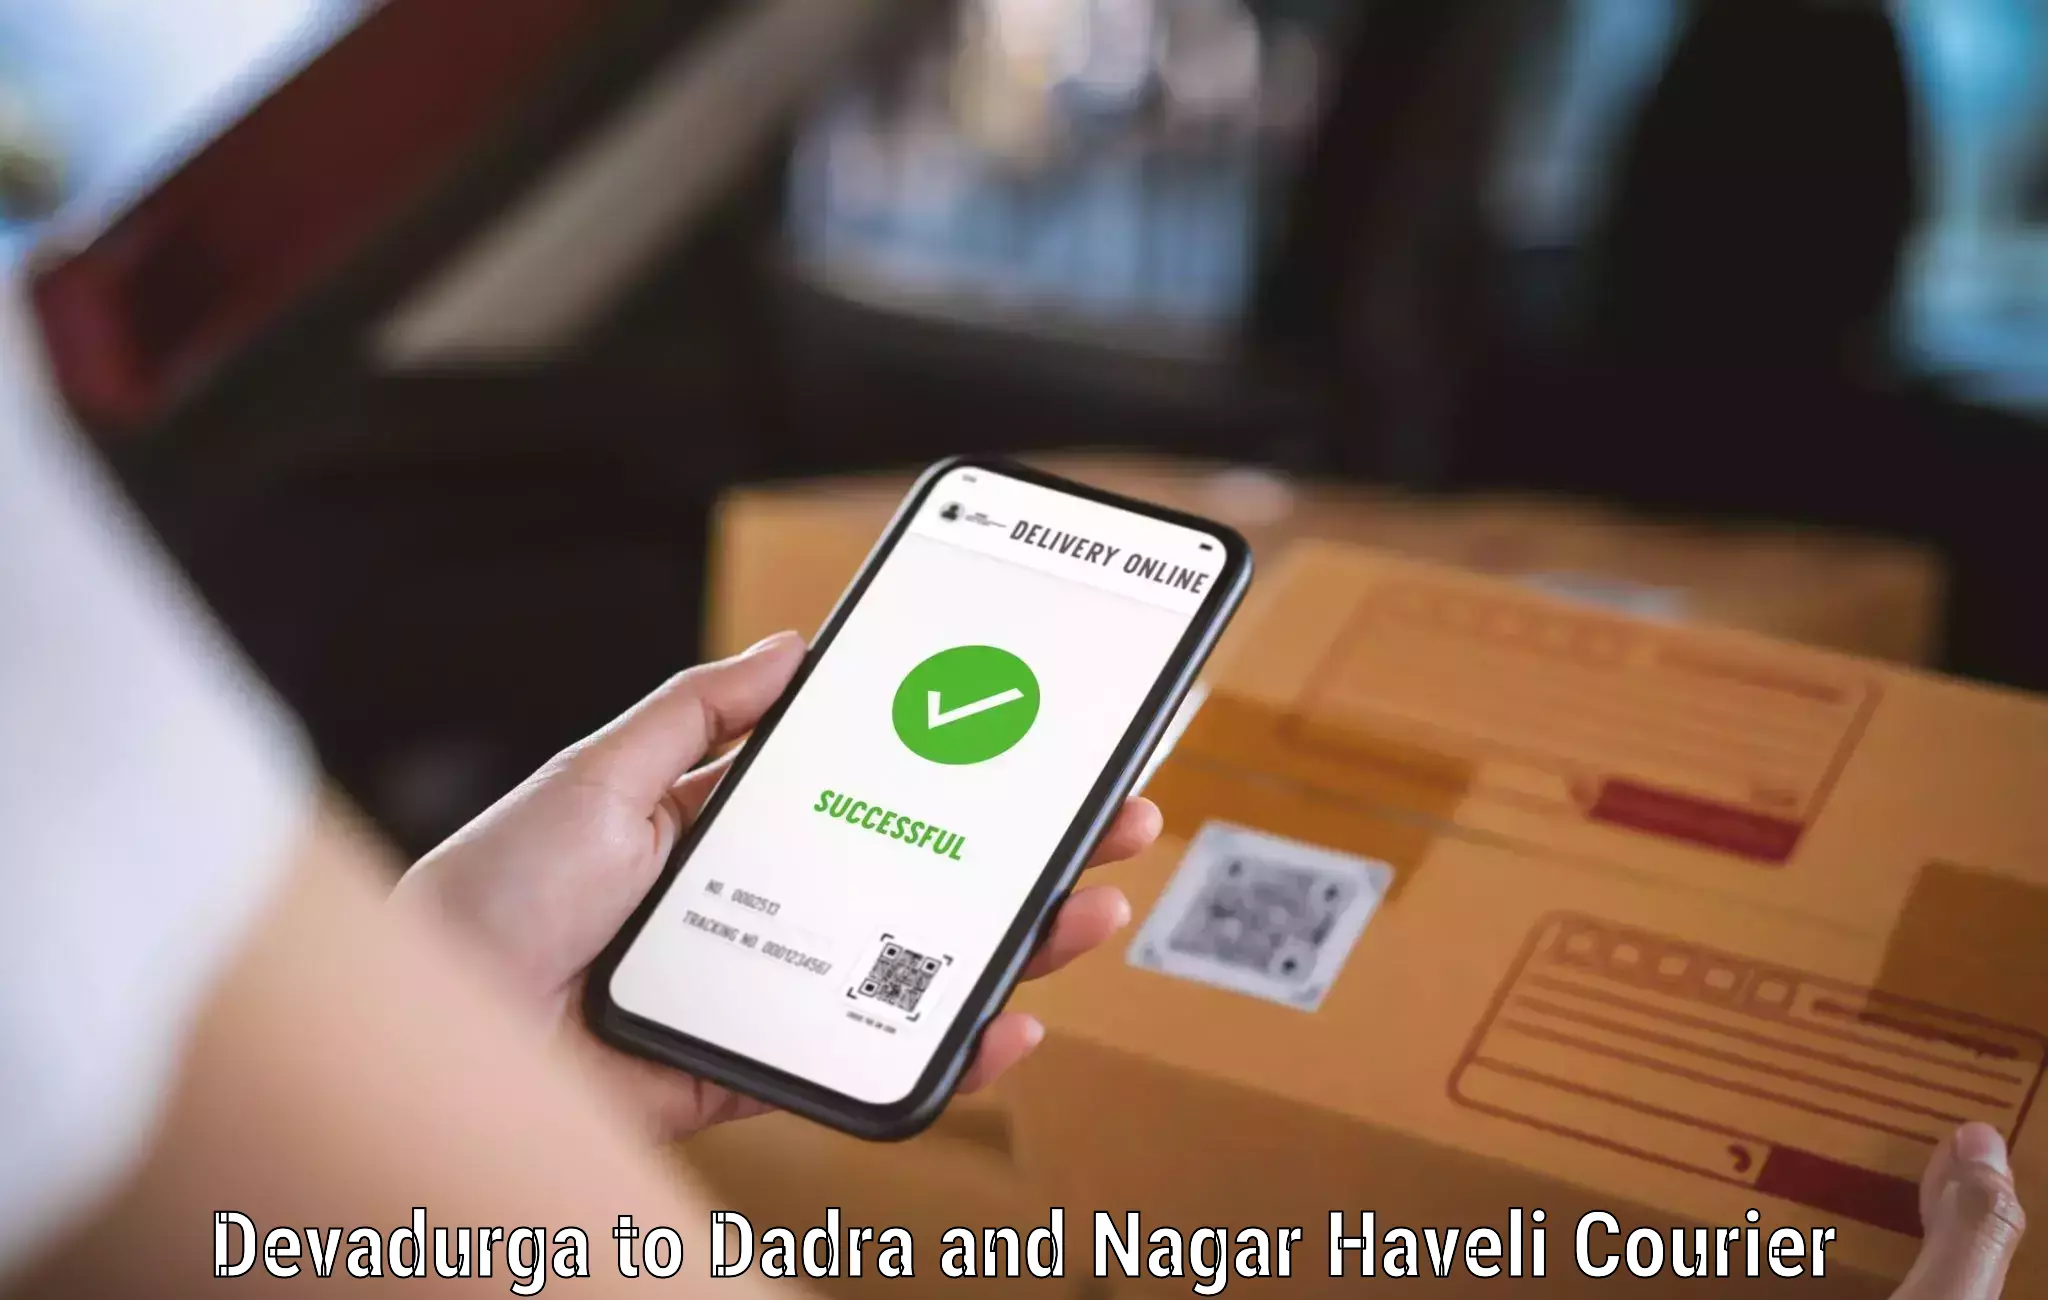 Courier service efficiency Devadurga to Dadra and Nagar Haveli